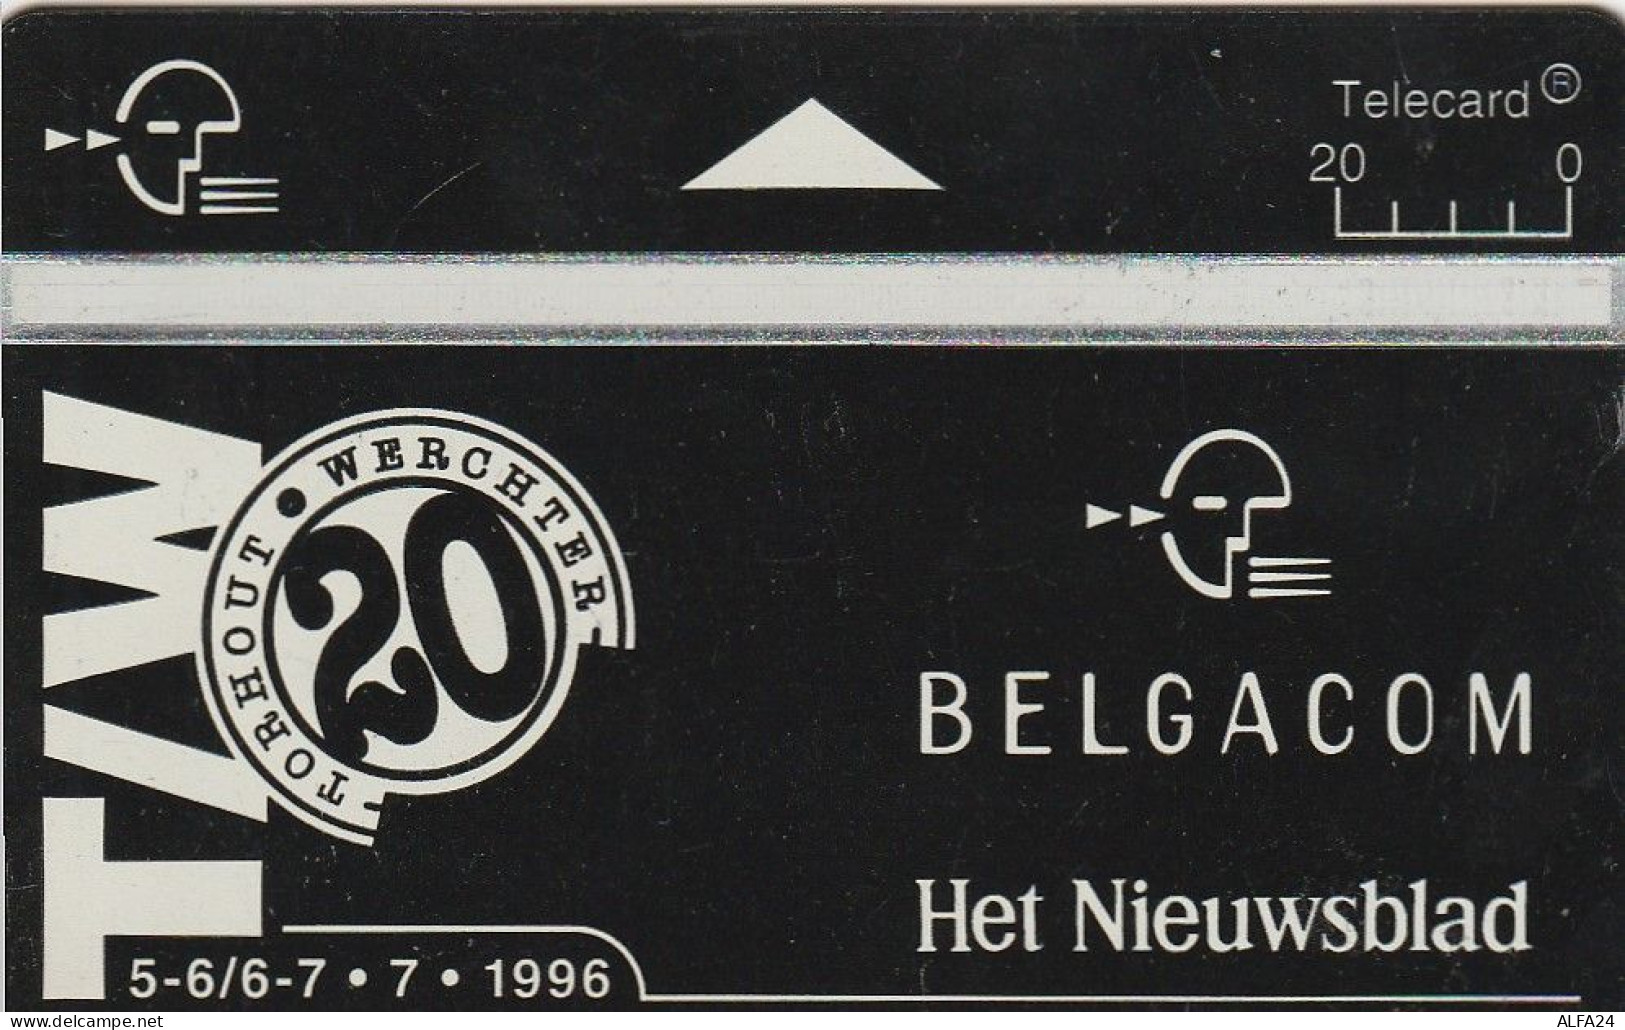 PHONE CARD BELGIO LG (CV6603 - Senza Chip